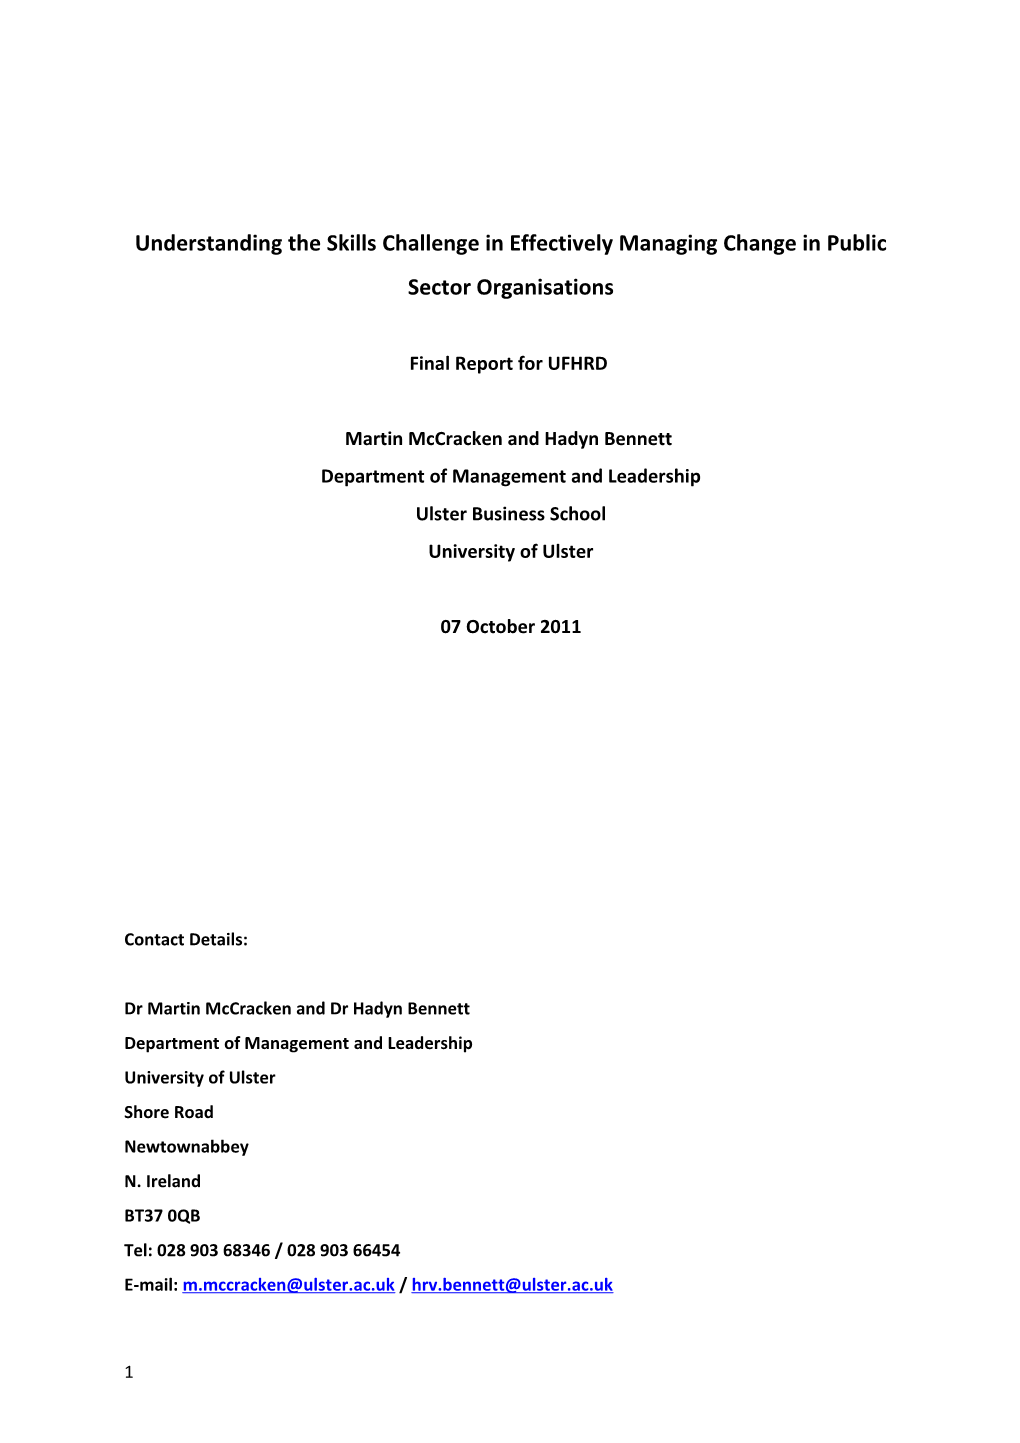 Understanding the Skills Challenge in Effectively Managing Change in Public Sector